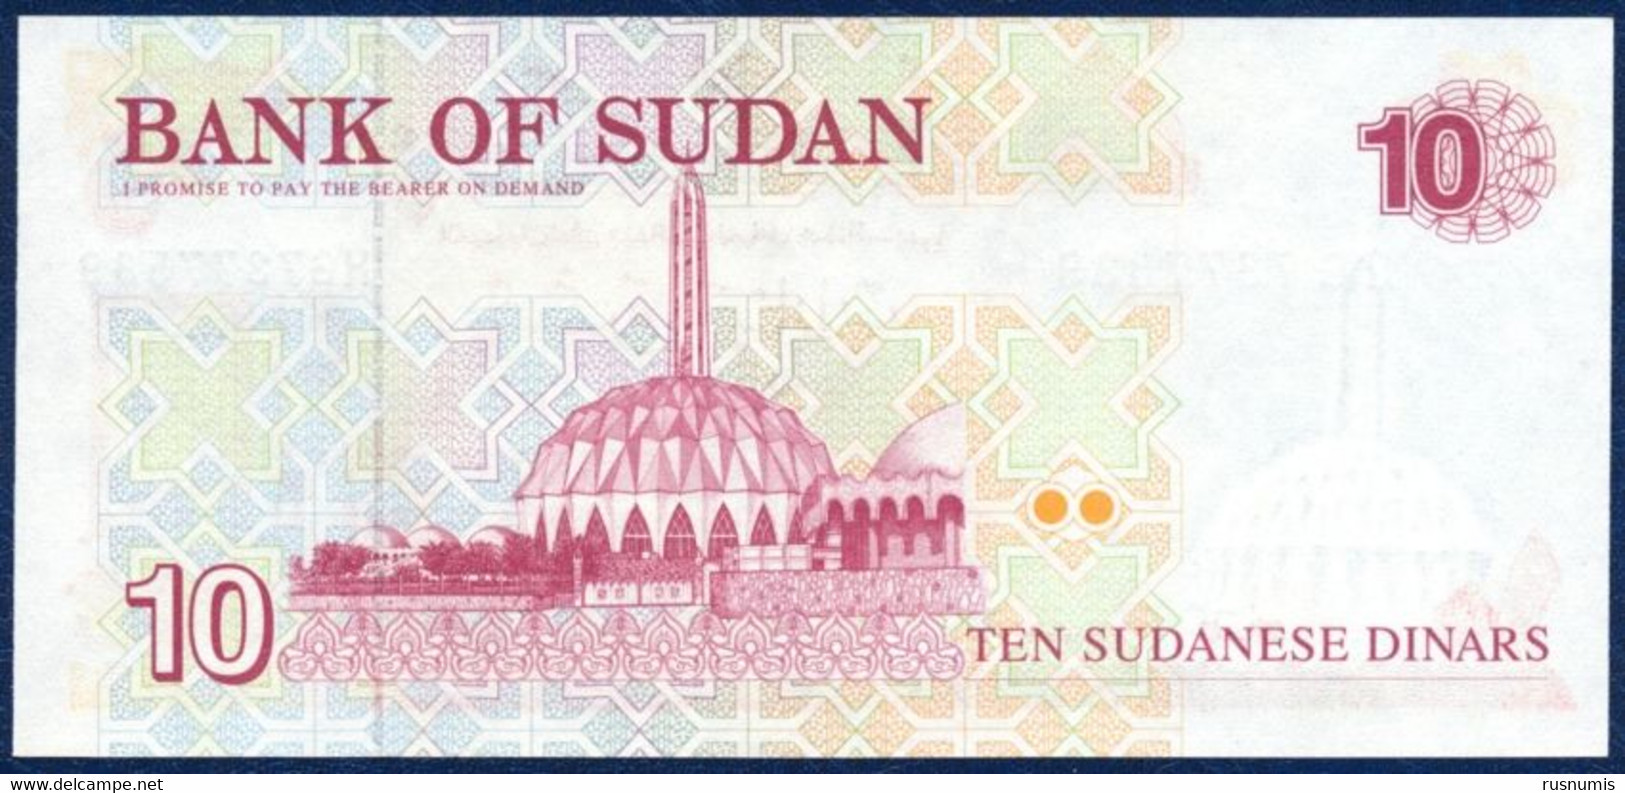 SUDAN 10 DINARS P-52a PALACE KHARTOUM MASJID AL-NILIN MOSQUE 1993 UNC - Sudan